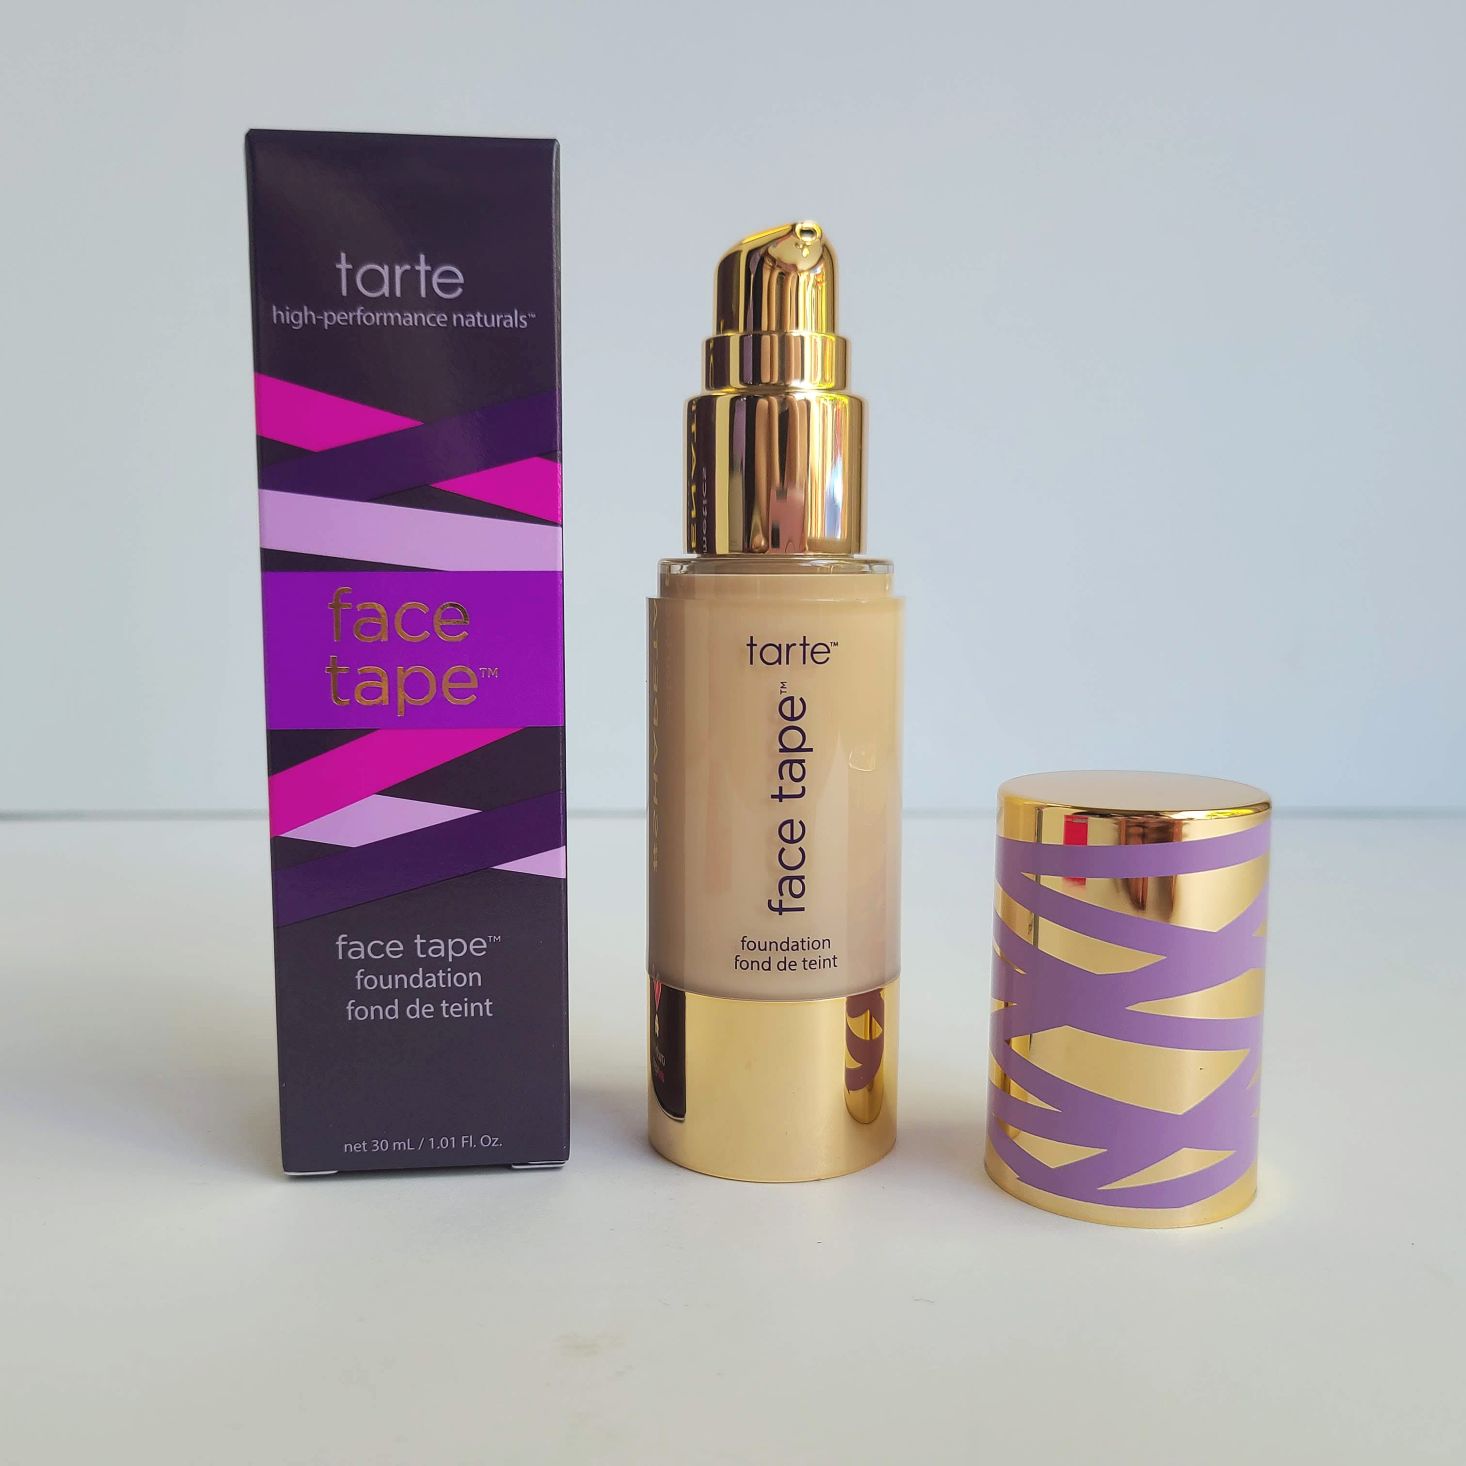 Tarte Create Your Own Beauty Kit June 2020 foundation uncapped